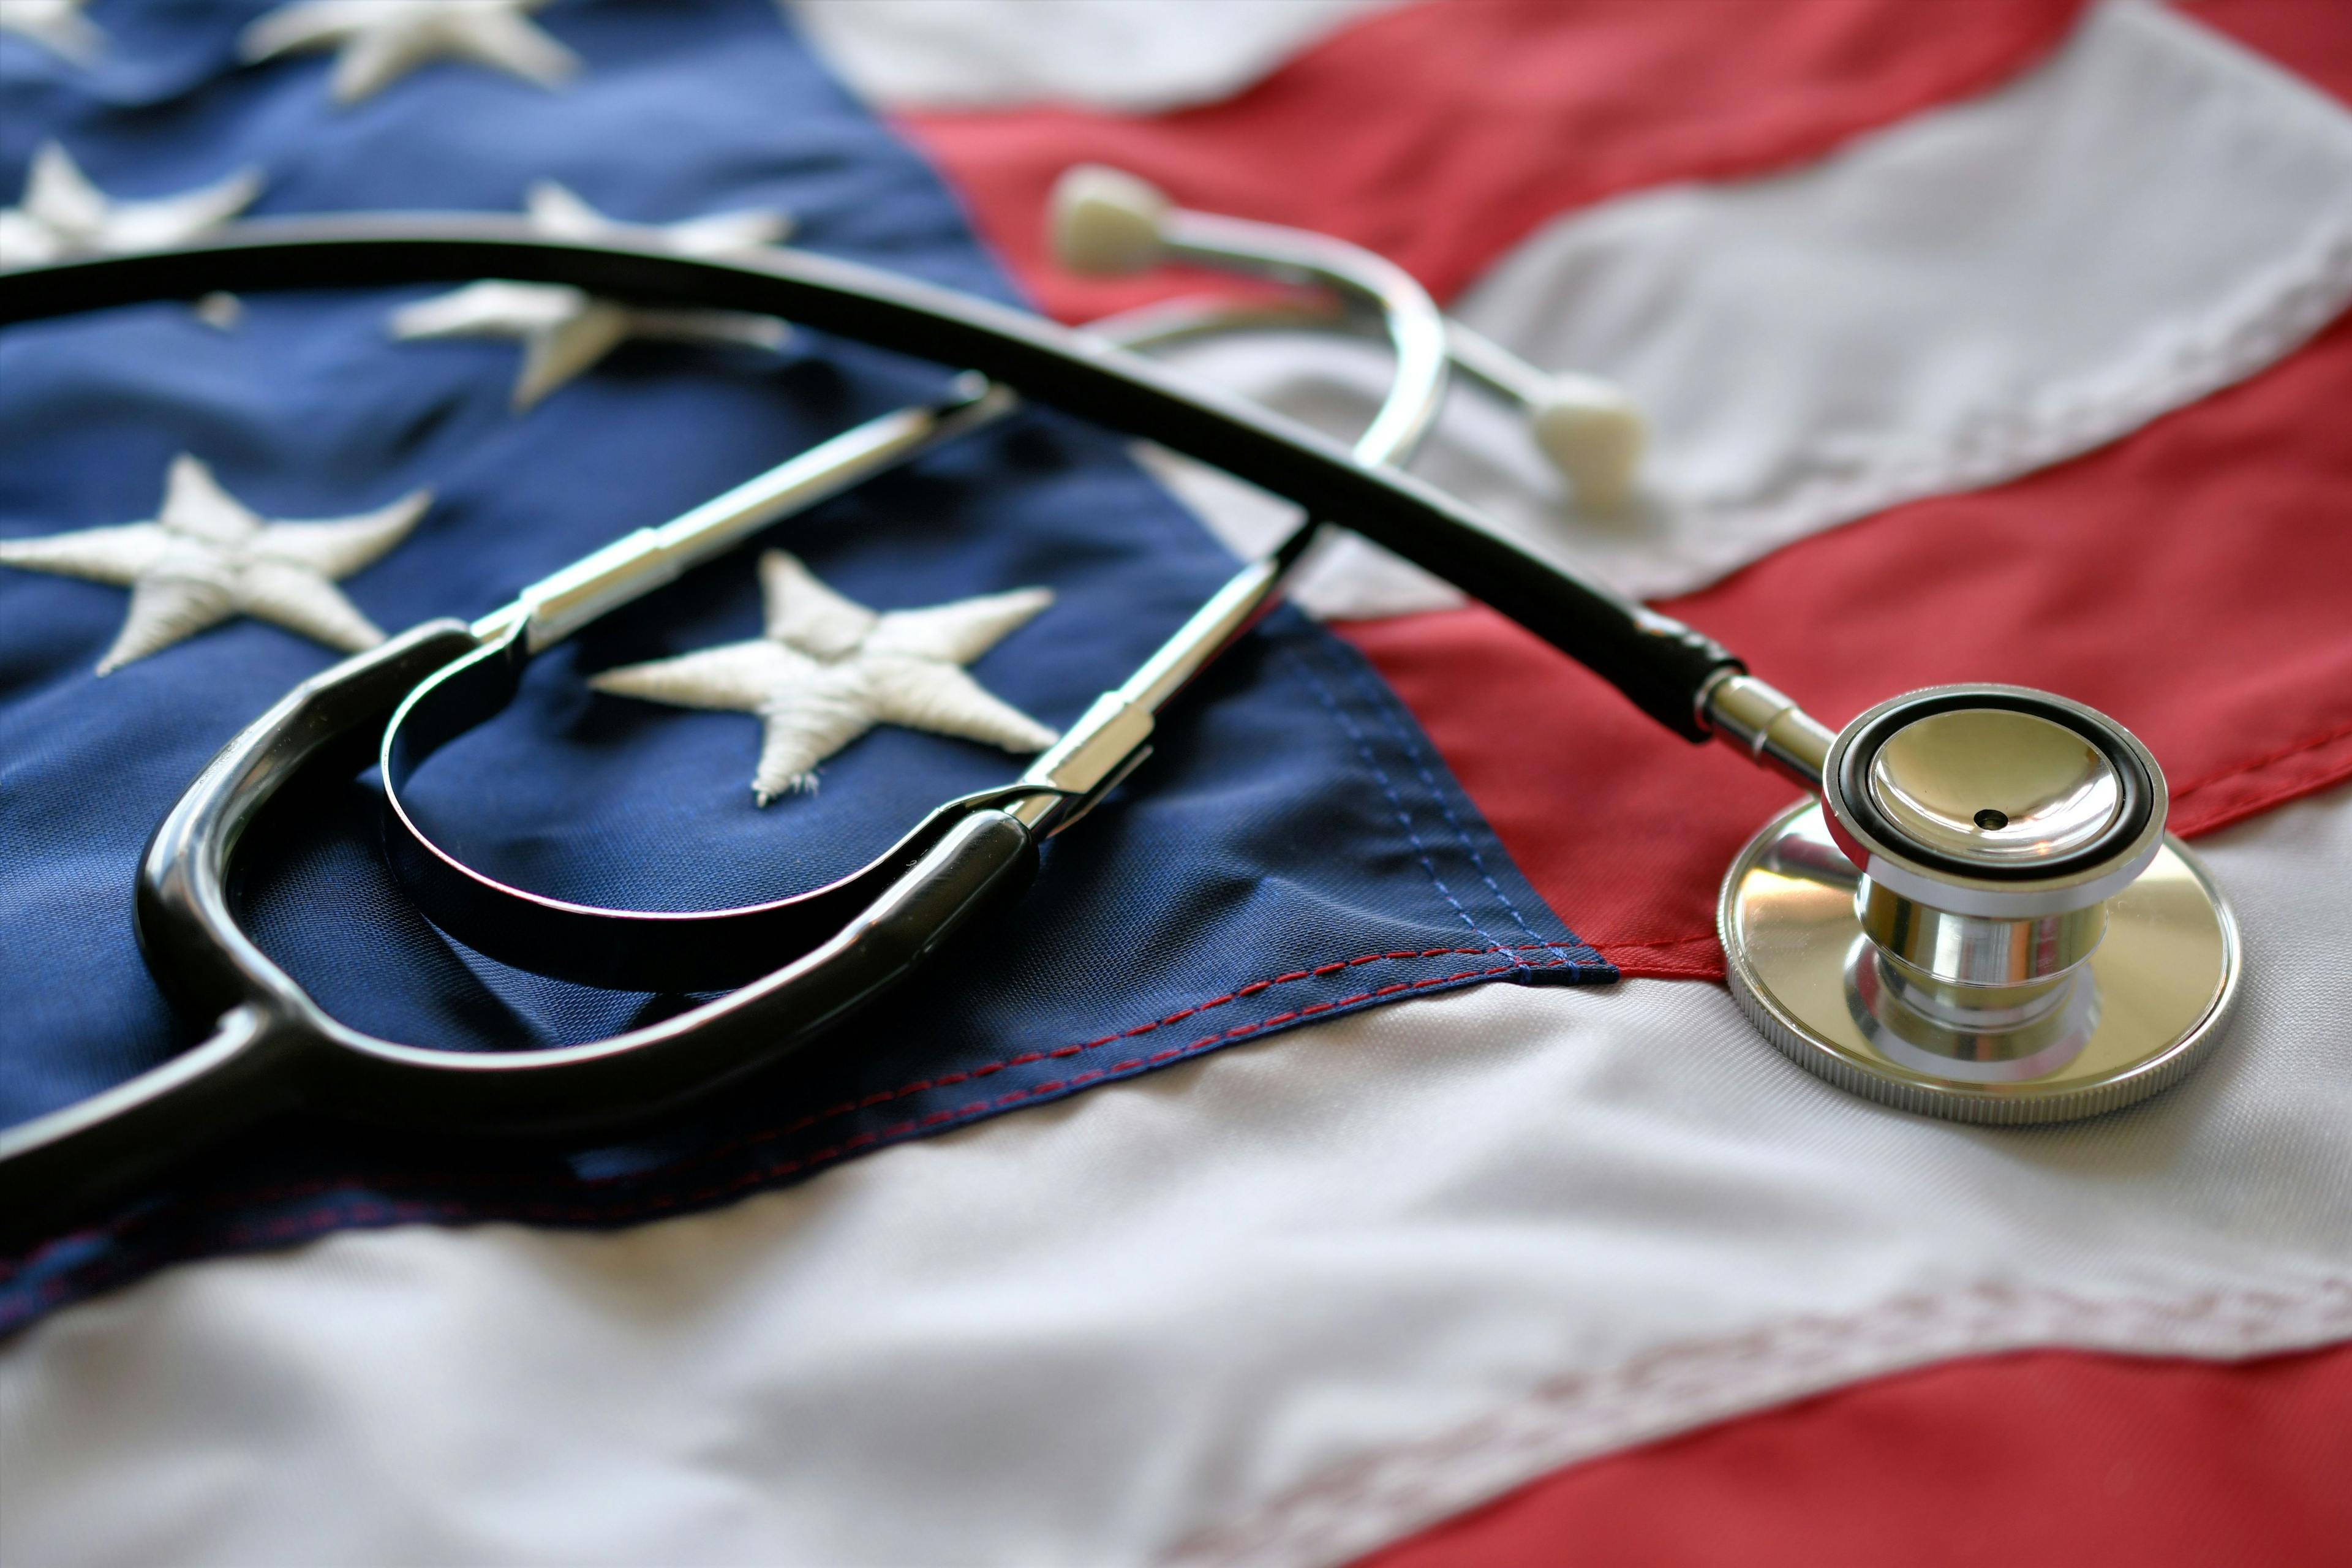 United States America healthcare medical concept - stethoscope on American flag - Image credit: MargJohnsonVA | stock.adobe.com